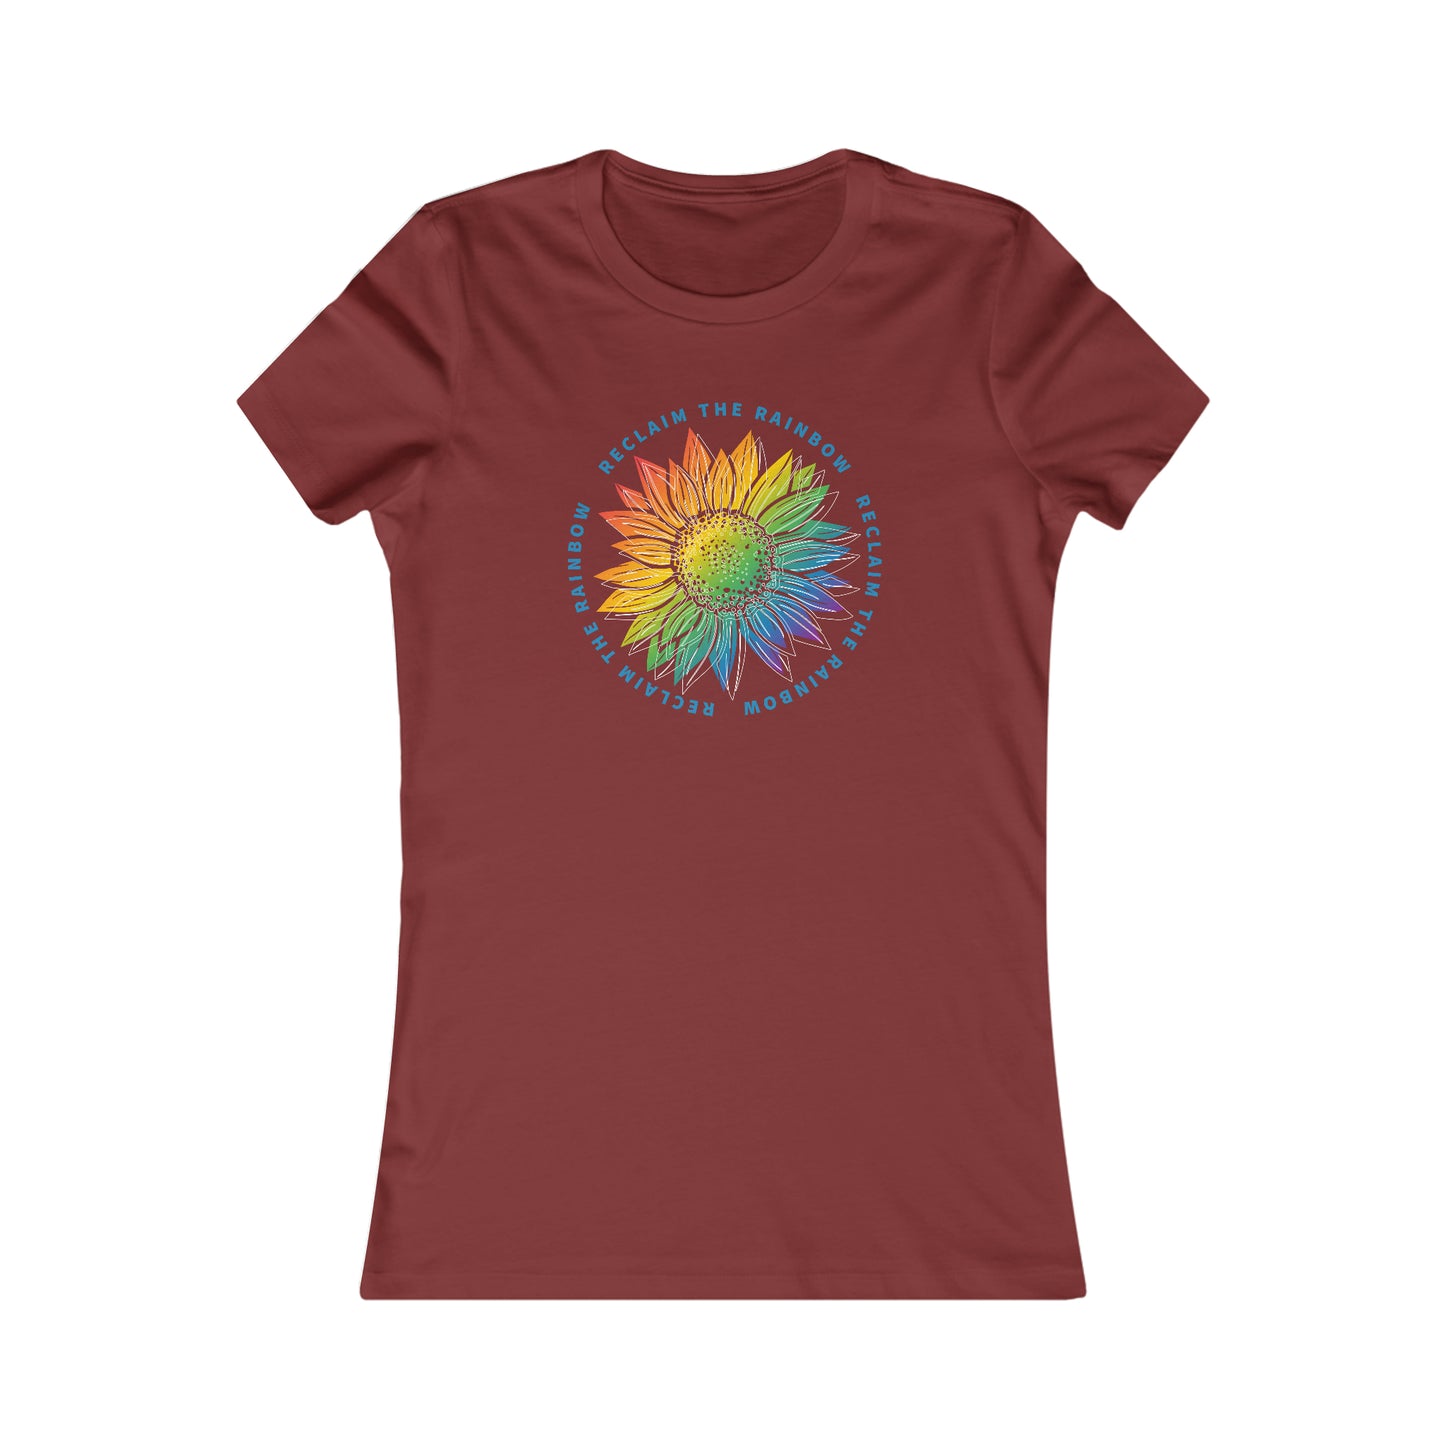 Reclaim The Rainbow T-Shirt For Take Back The Rainbow TShirt For Rainbow T Shirt For Spiritual Shirt For Sunflower Tee For Genesis 9:17 Shirt For Christian Shirt